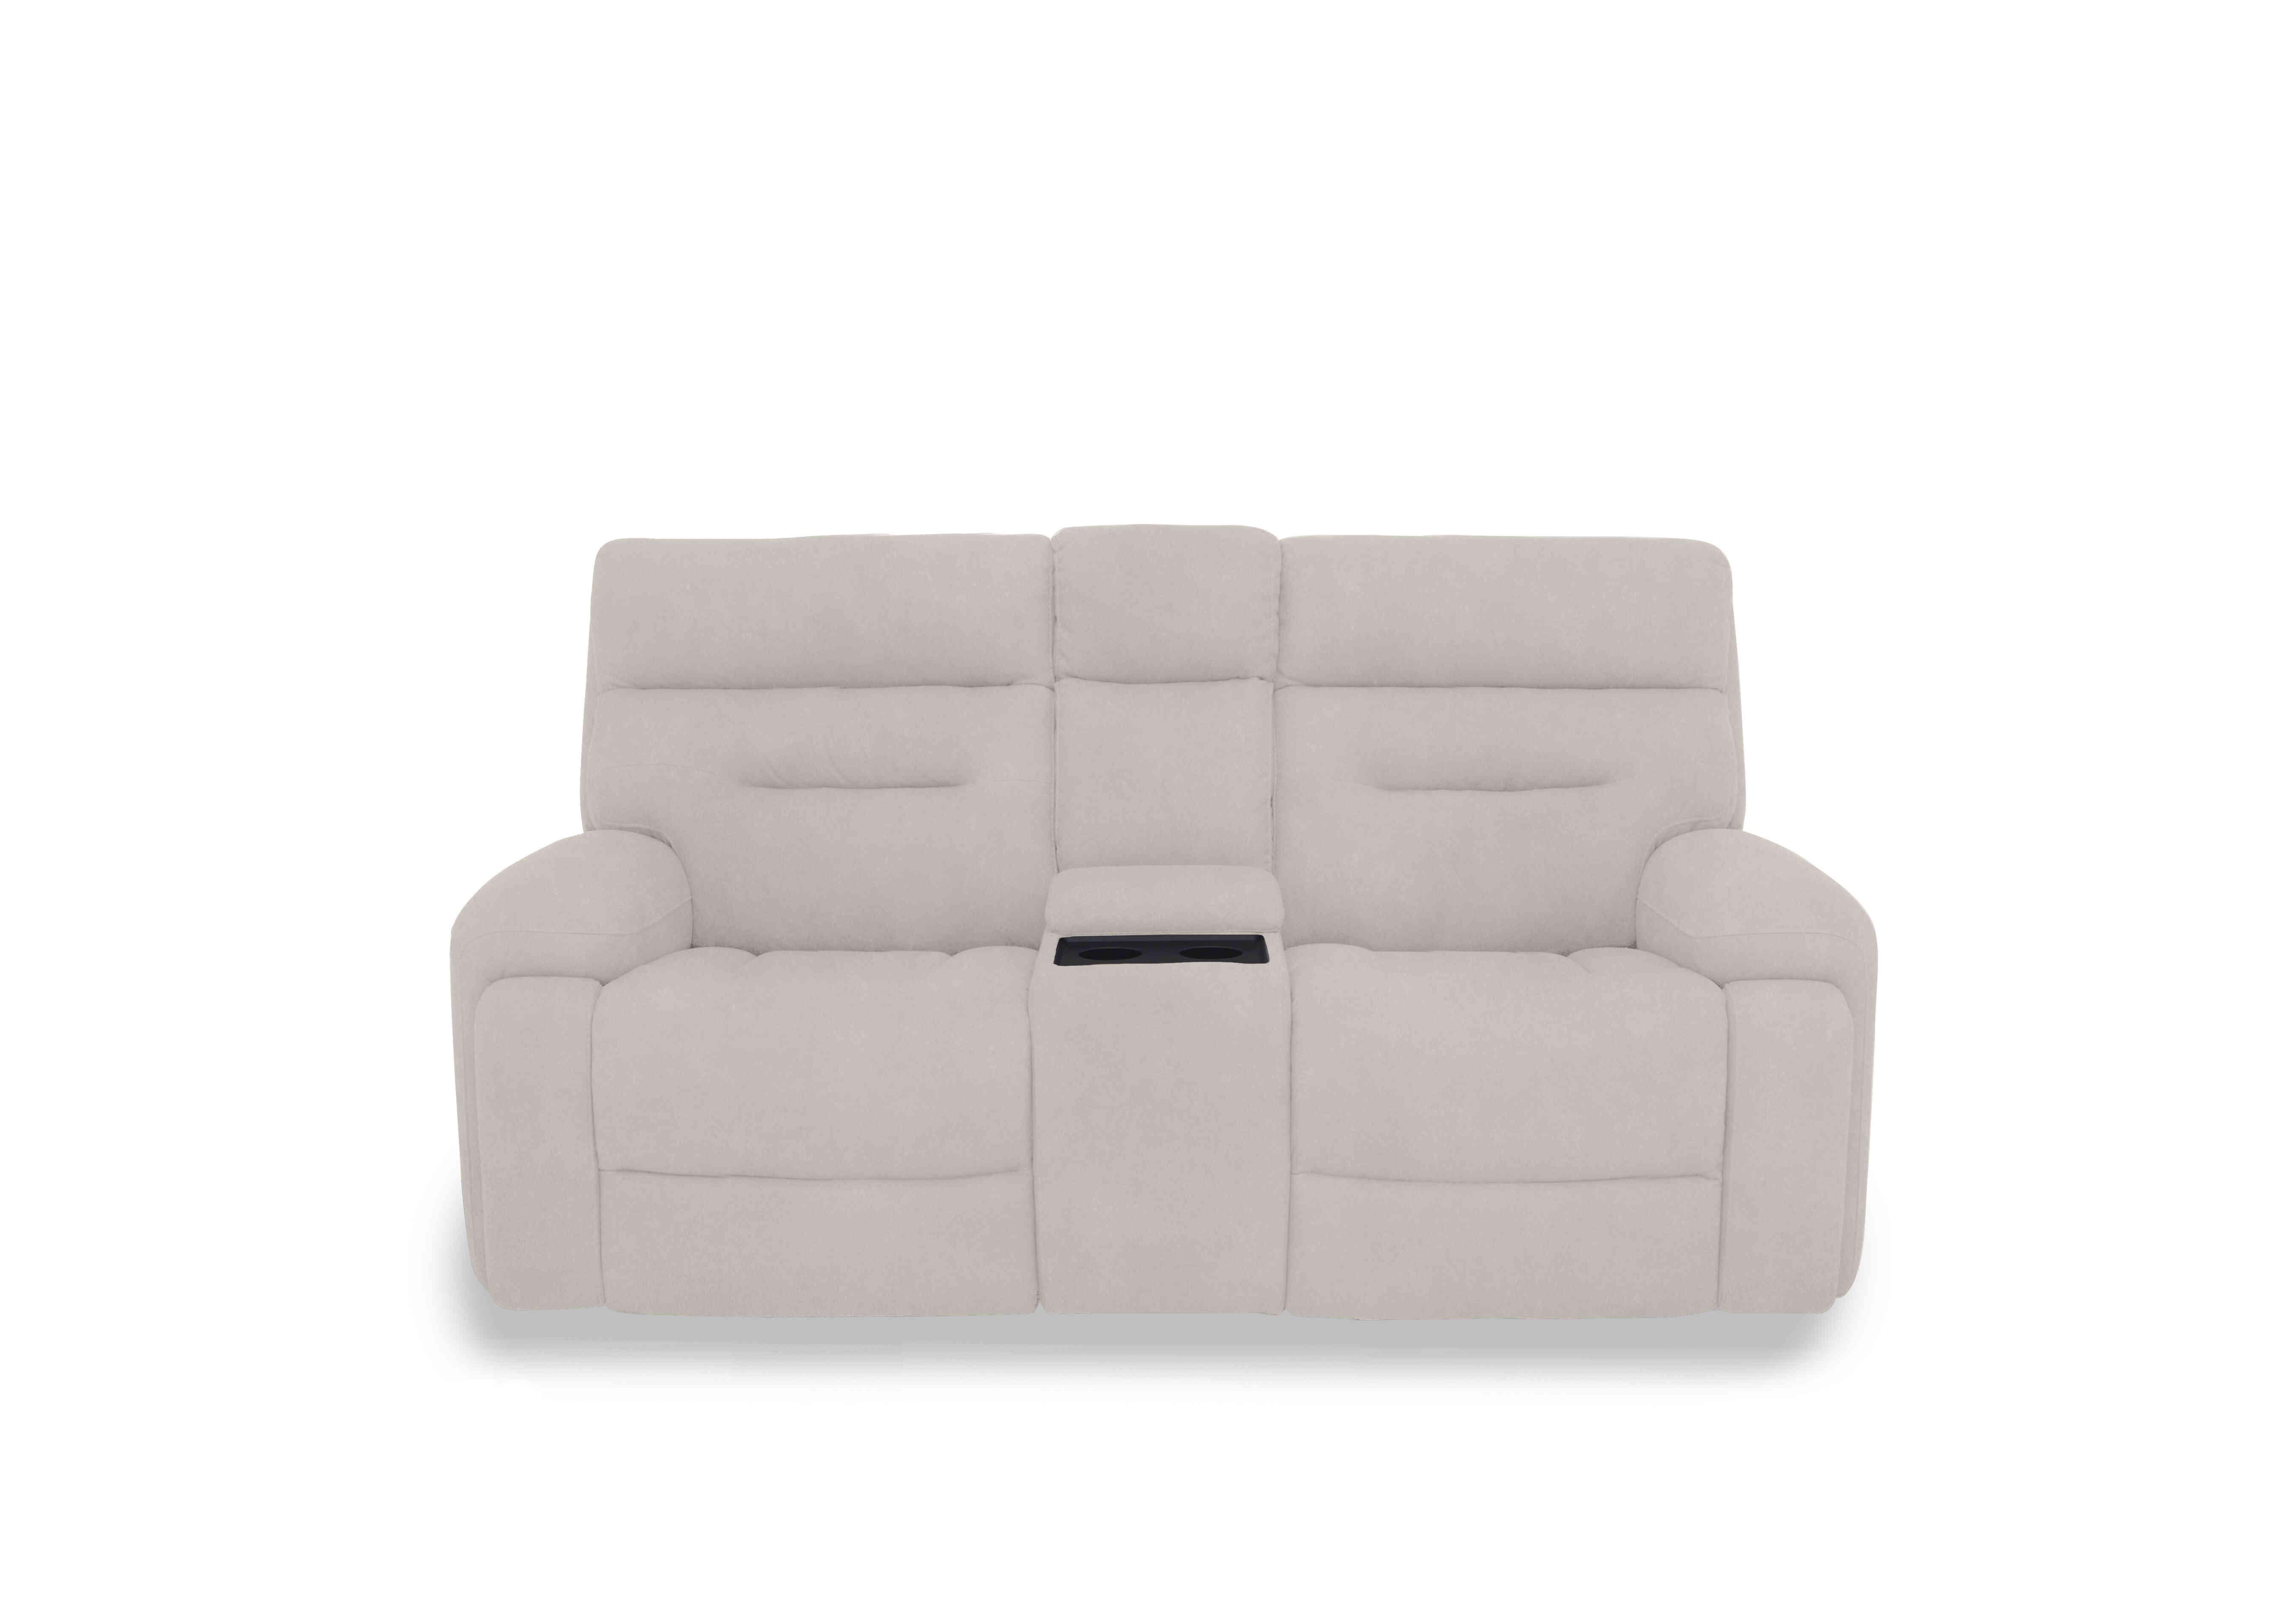 Cinemax Media 2 Seater Fabric Power Recliner Sofa with Power Headrests in Vv-0307 Velvet White on Furniture Village